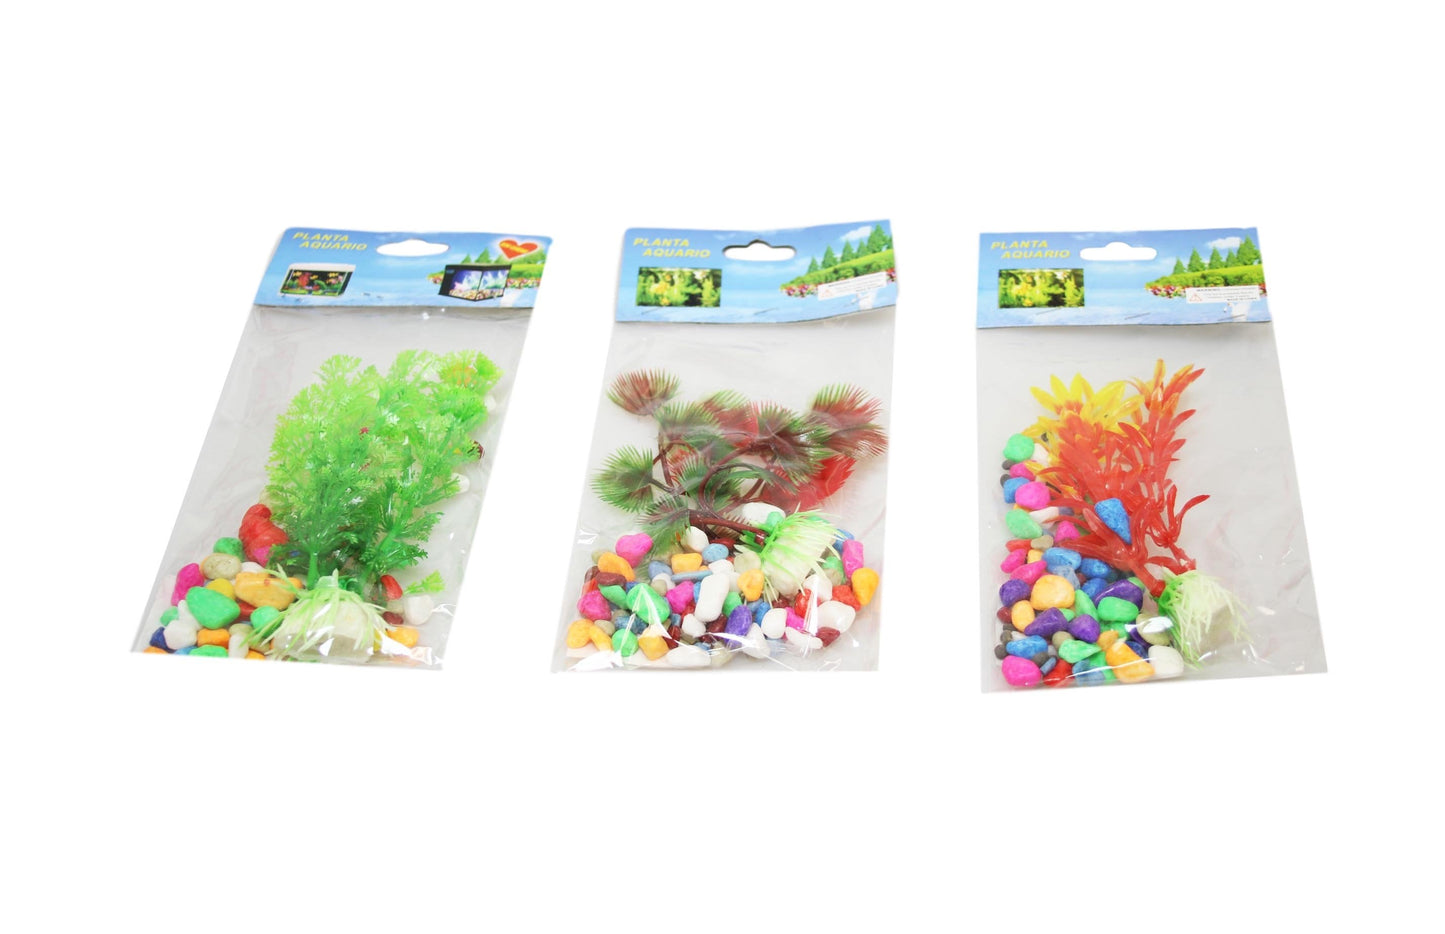 Artificial Fish Tank Plants Aquarium Aquatic Decoration Ornament Plant and Stones 5896 (Large Letter Rate)